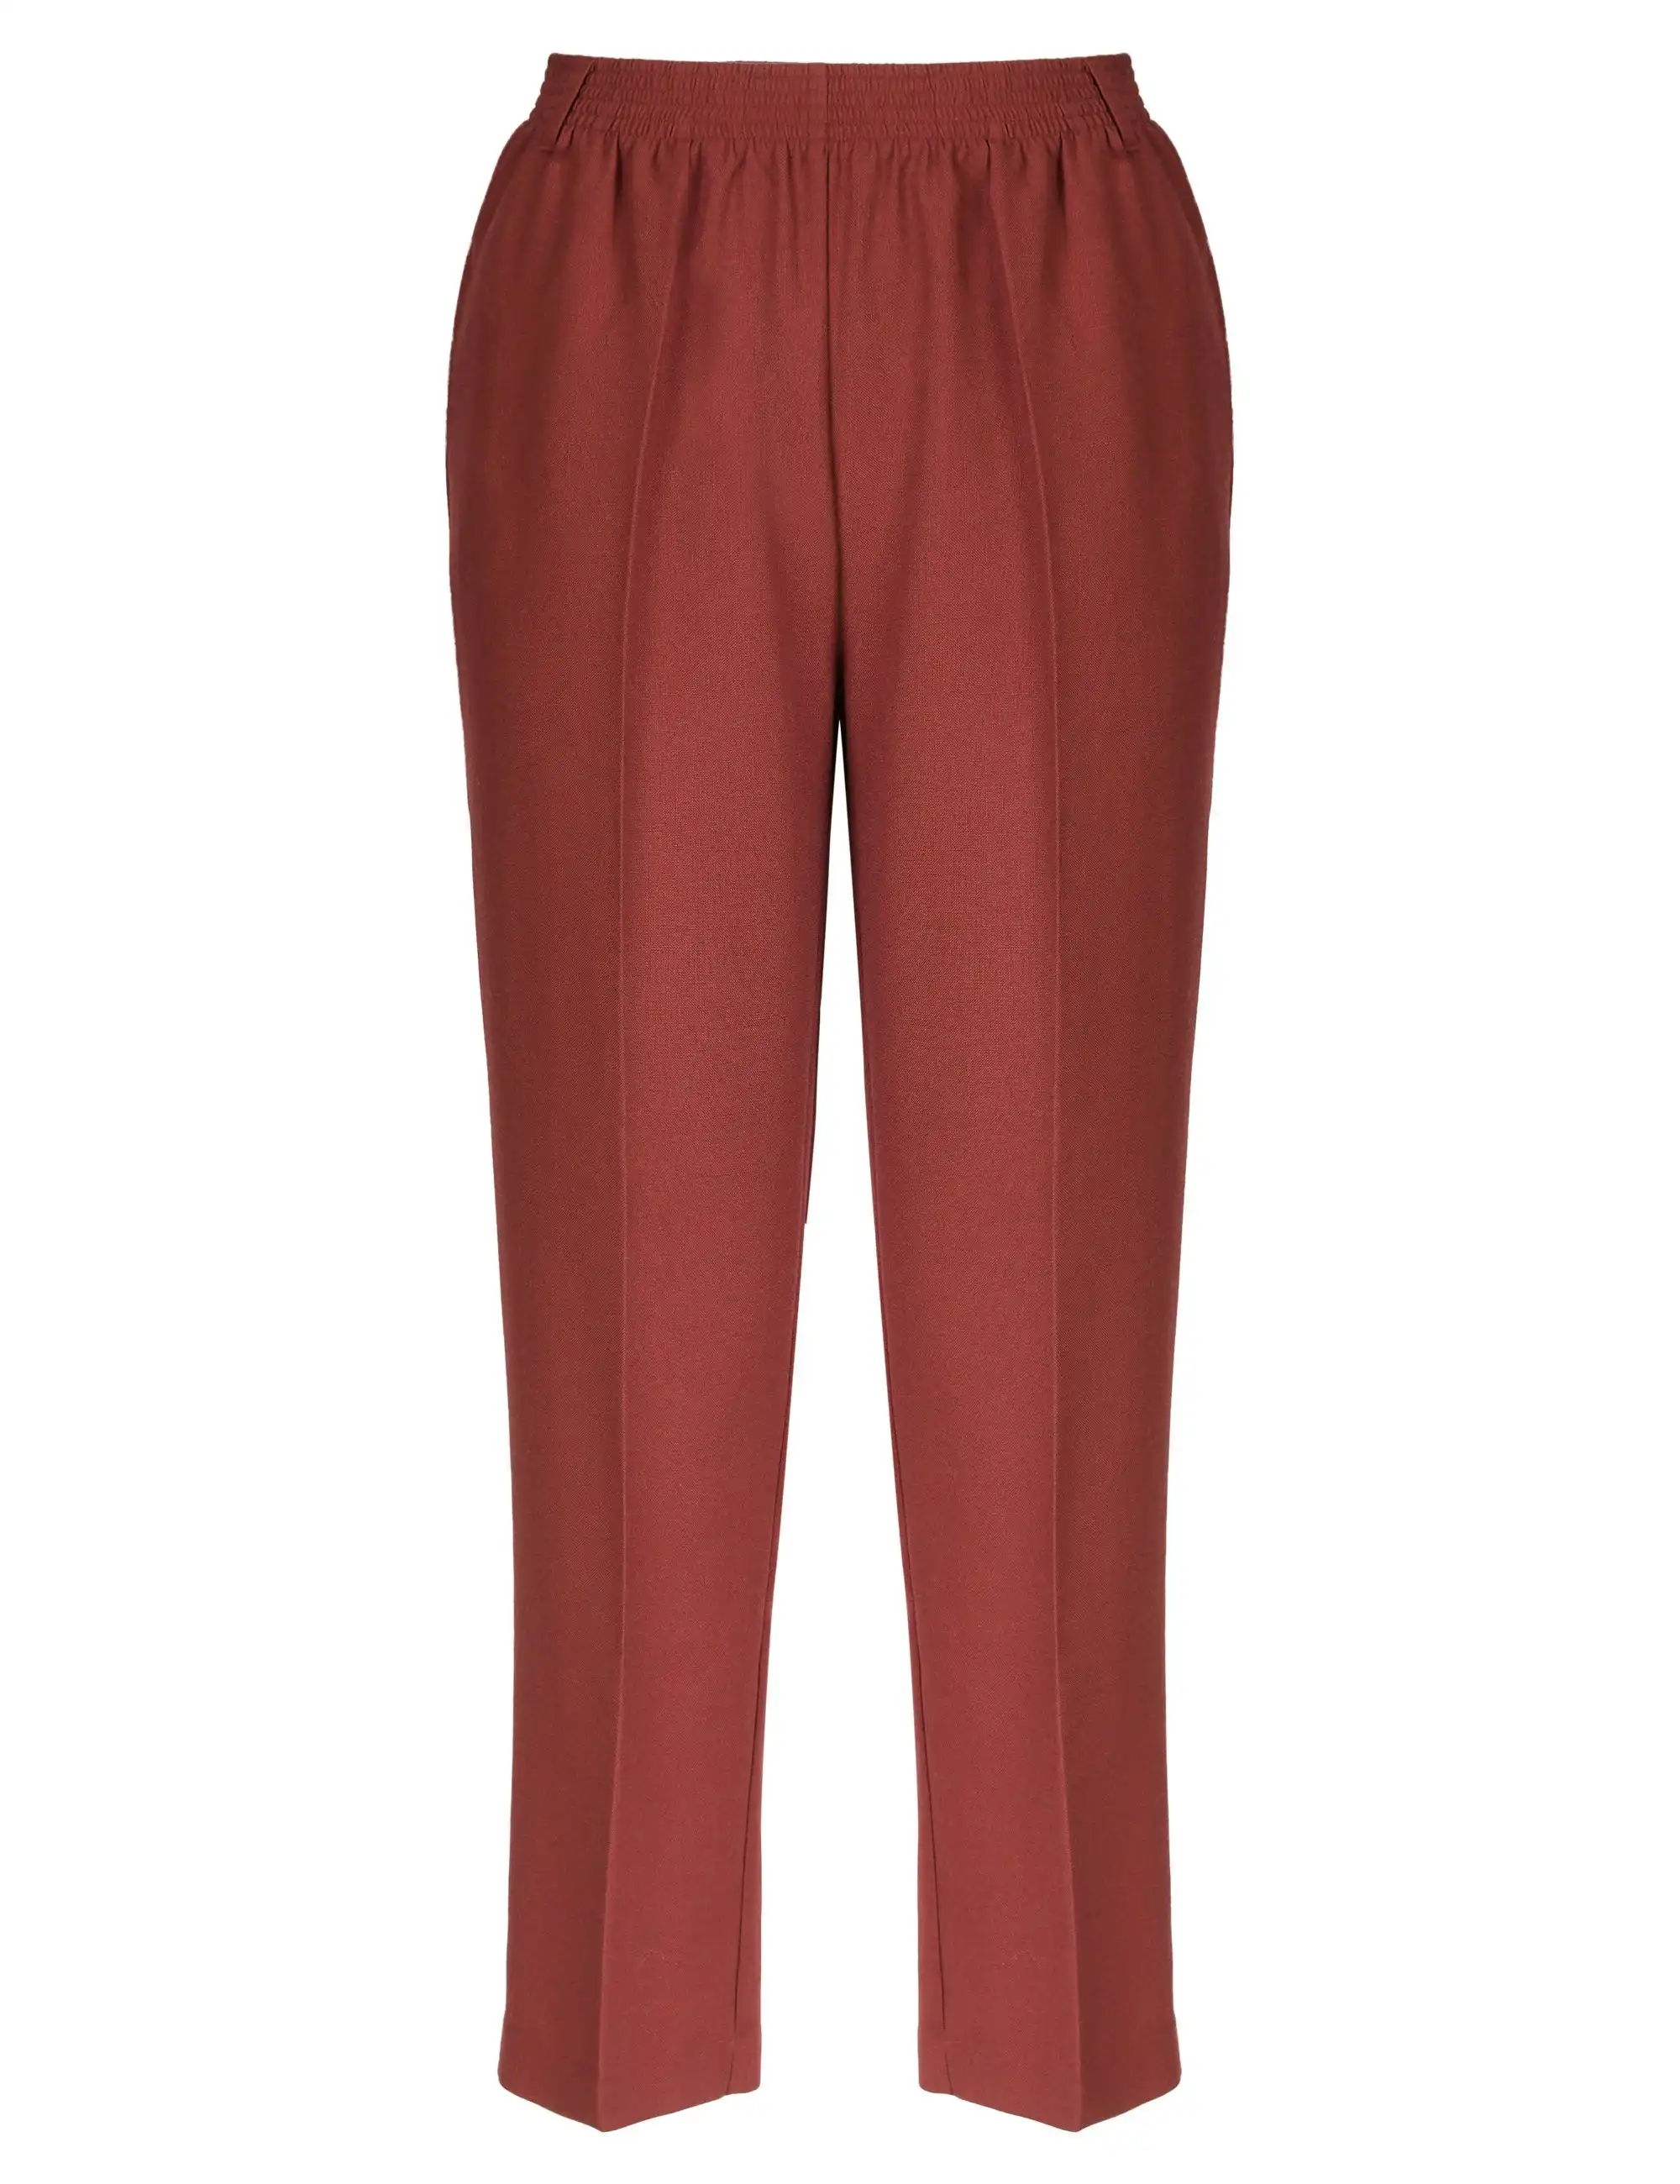 Millers Short Length Essential Pants